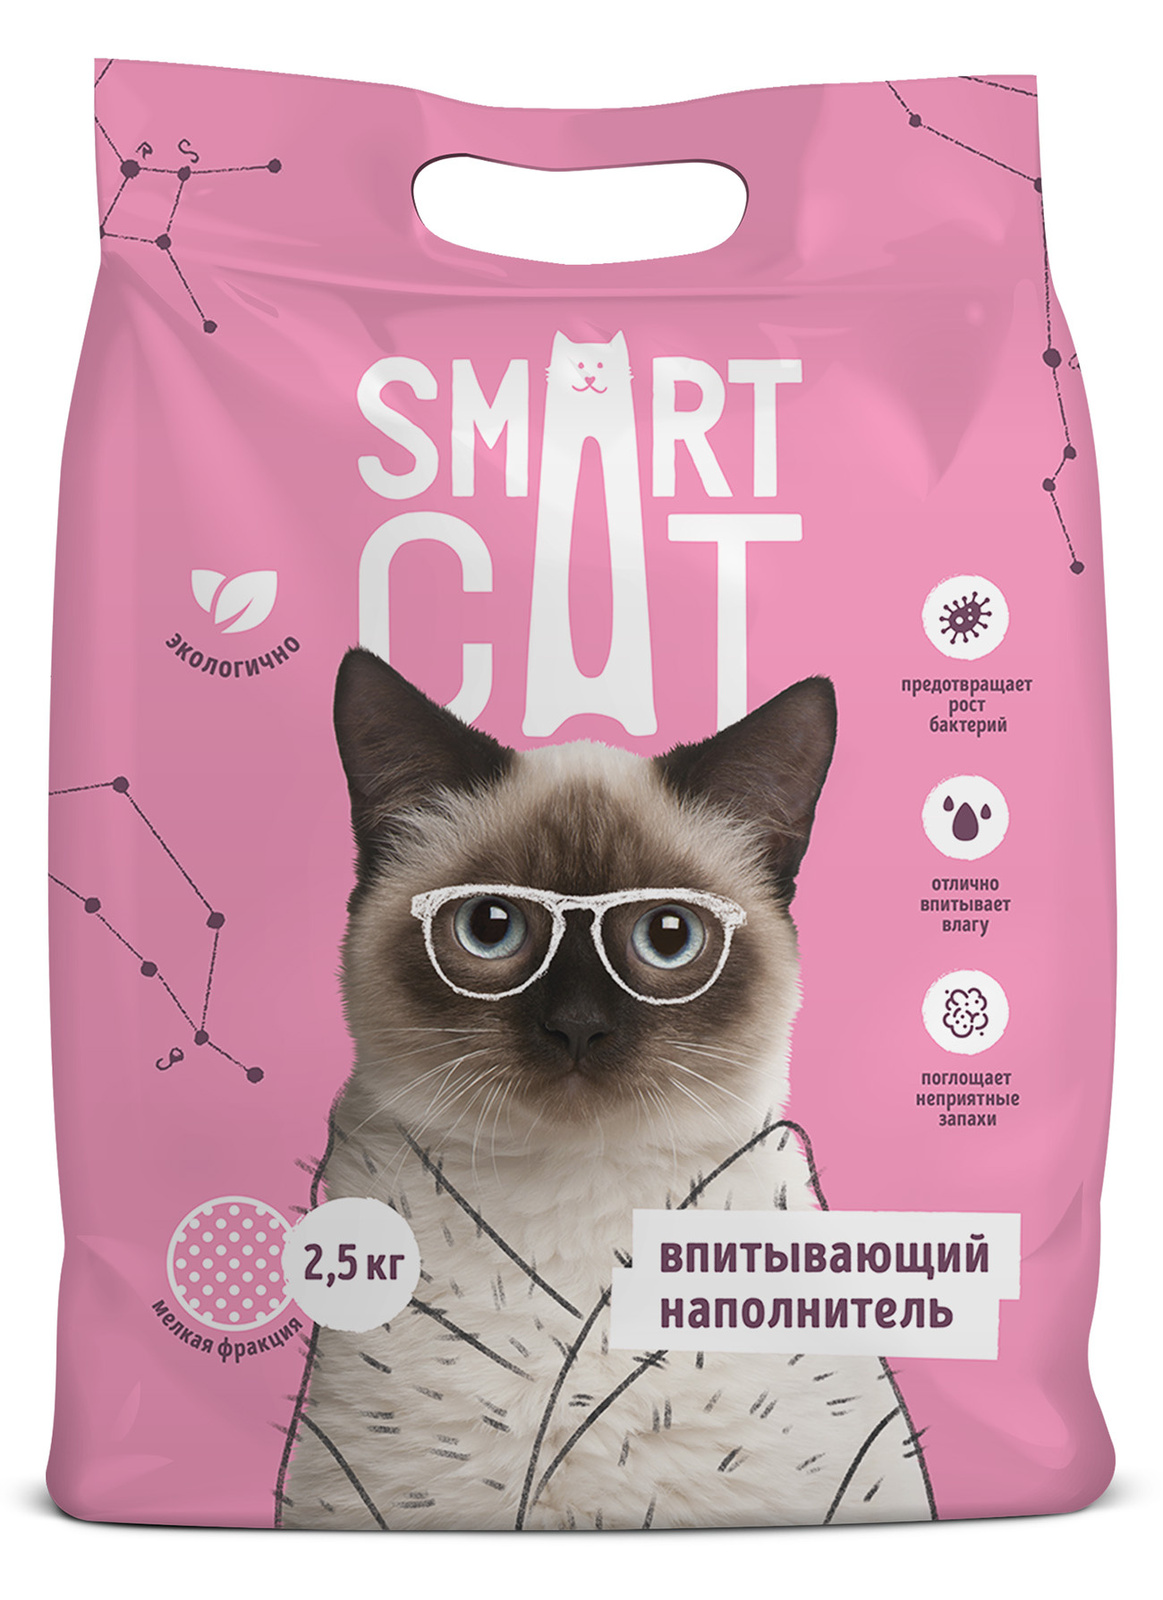 Smart Cat наполнитель впитывающий наполнитель, мелкая фракция (5 кг) Smart Cat наполнитель впитывающий наполнитель, мелкая фракция (5 кг) - фото 1